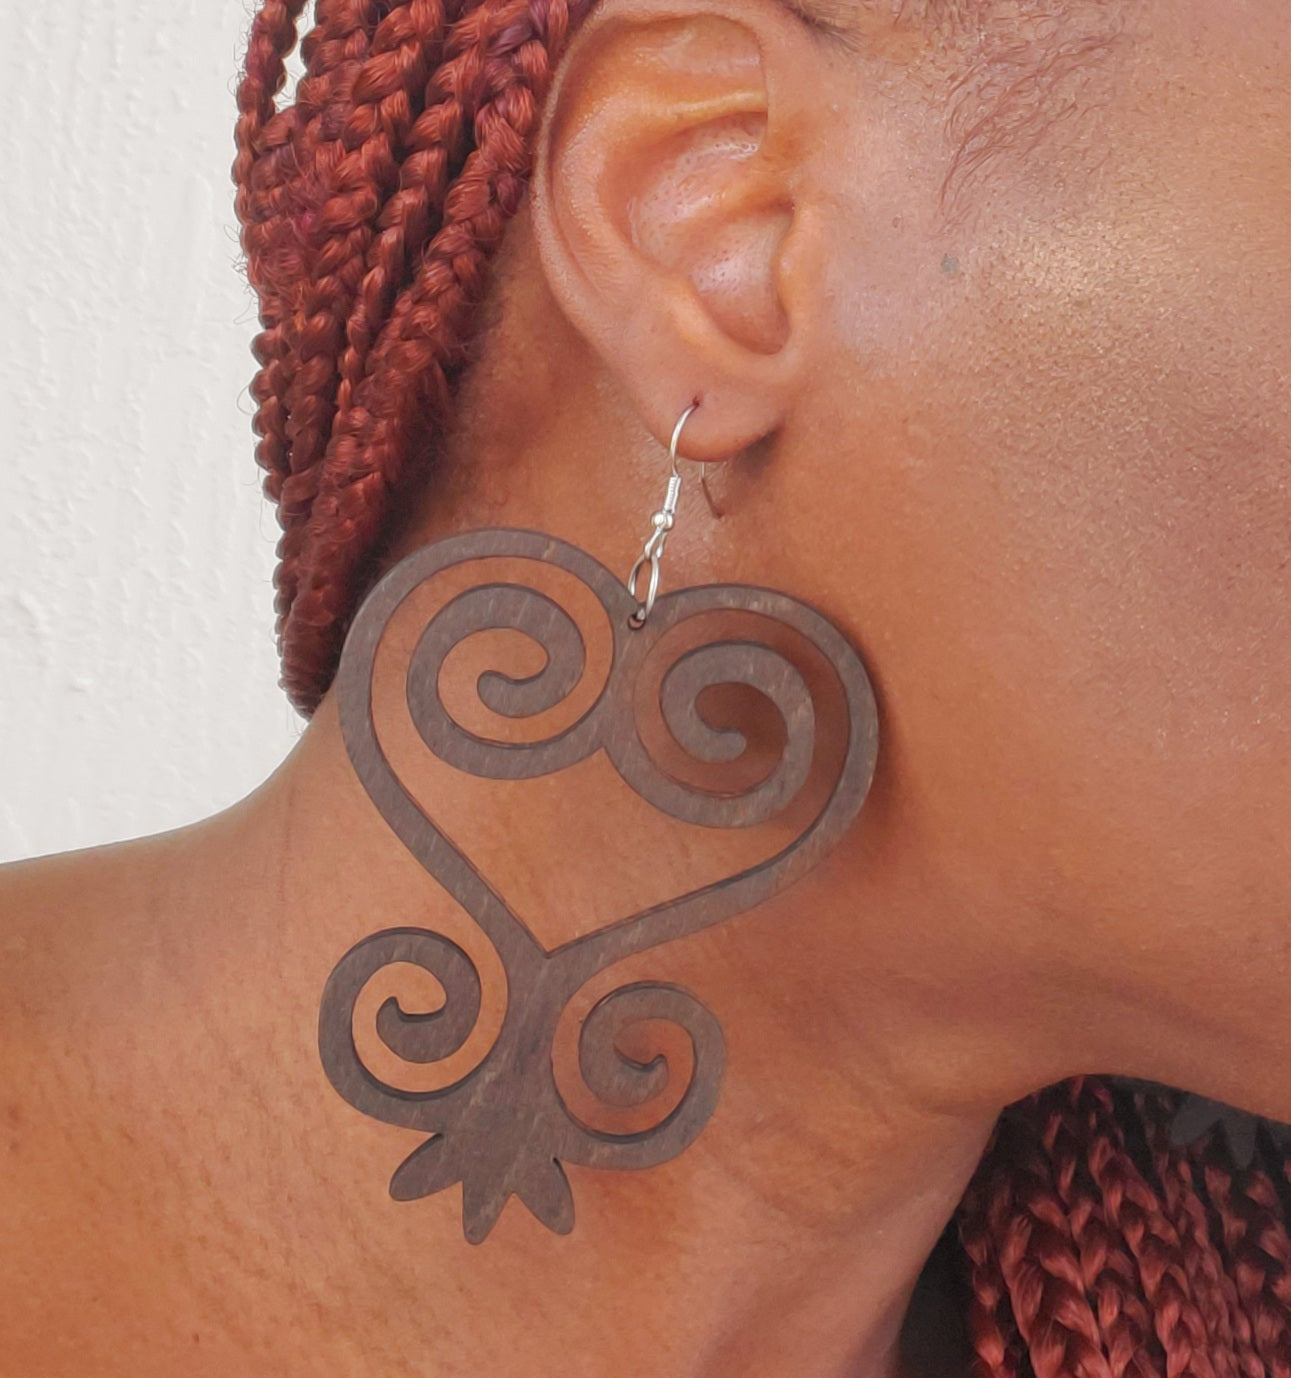 SANKOFA - Adinkra Symbol Earrings